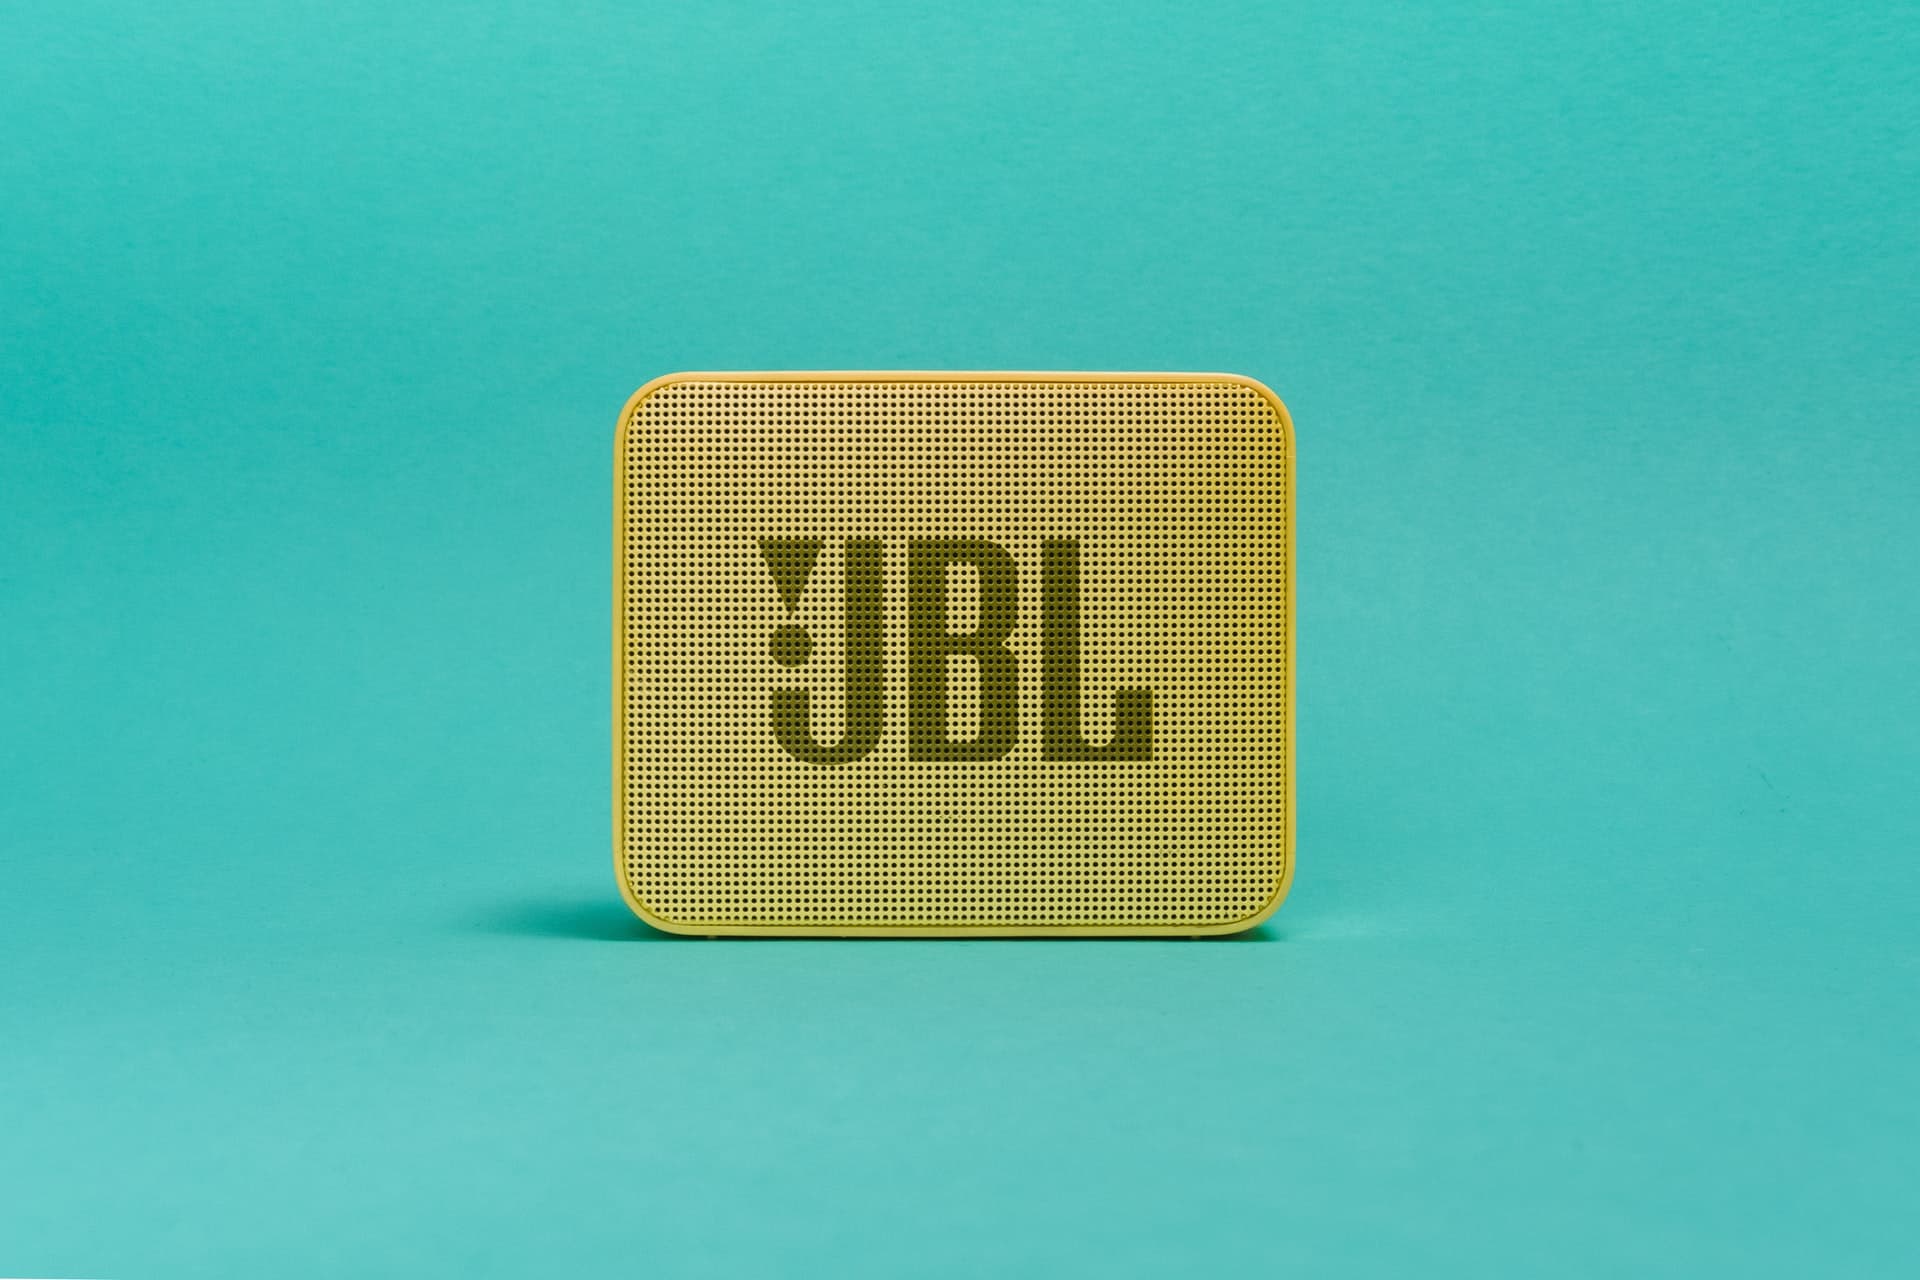 JBL Bluetooth speaker on a sea green background